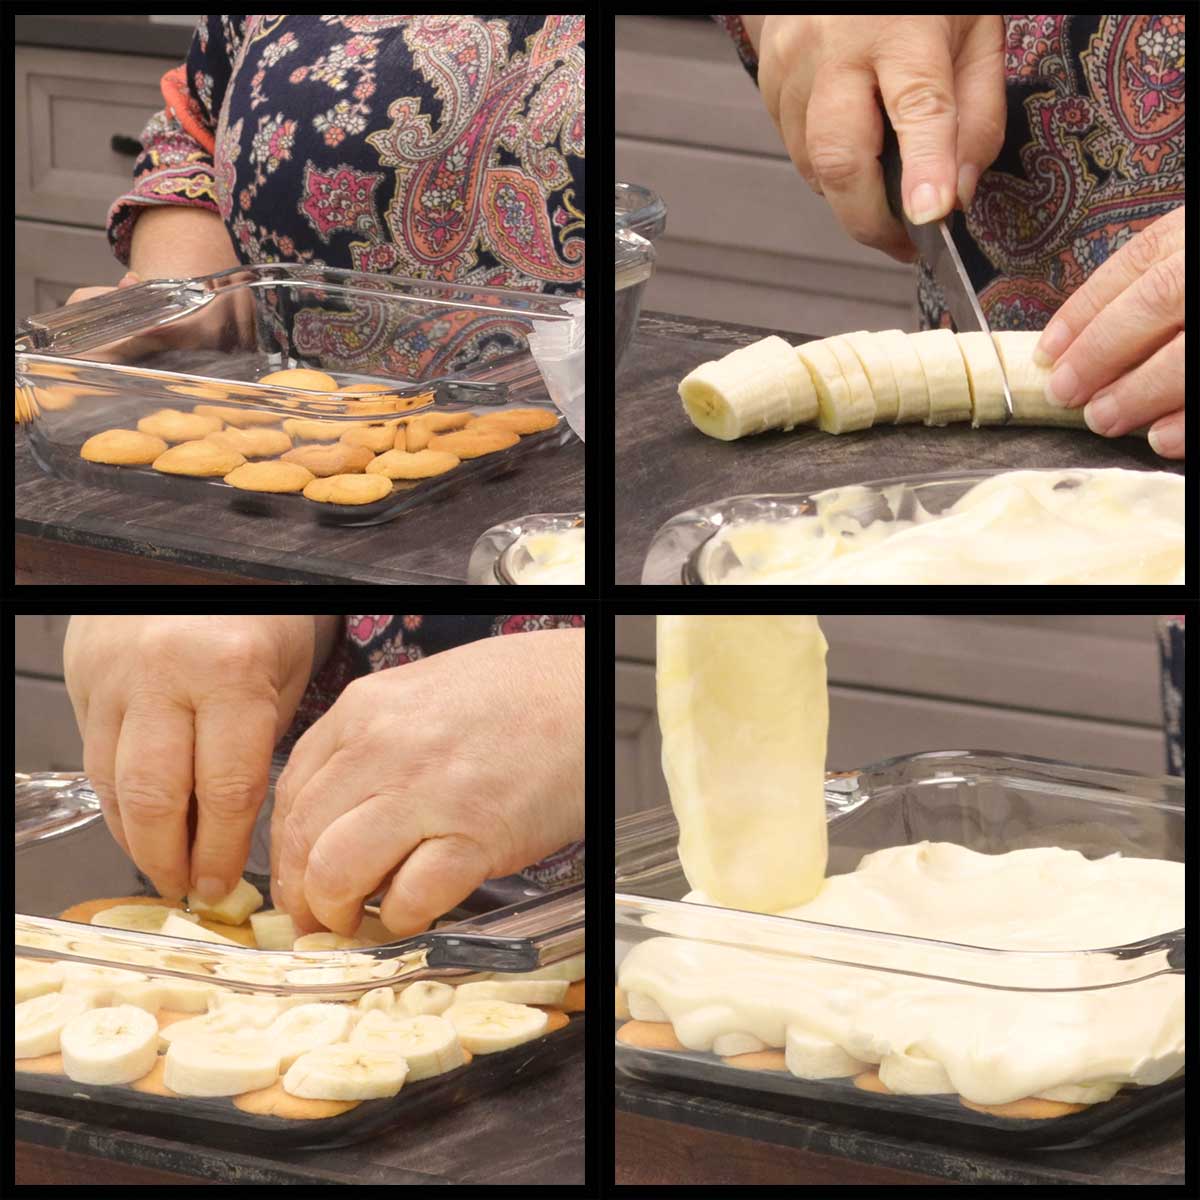 layering cookies, banana slices, and pudding into dish.